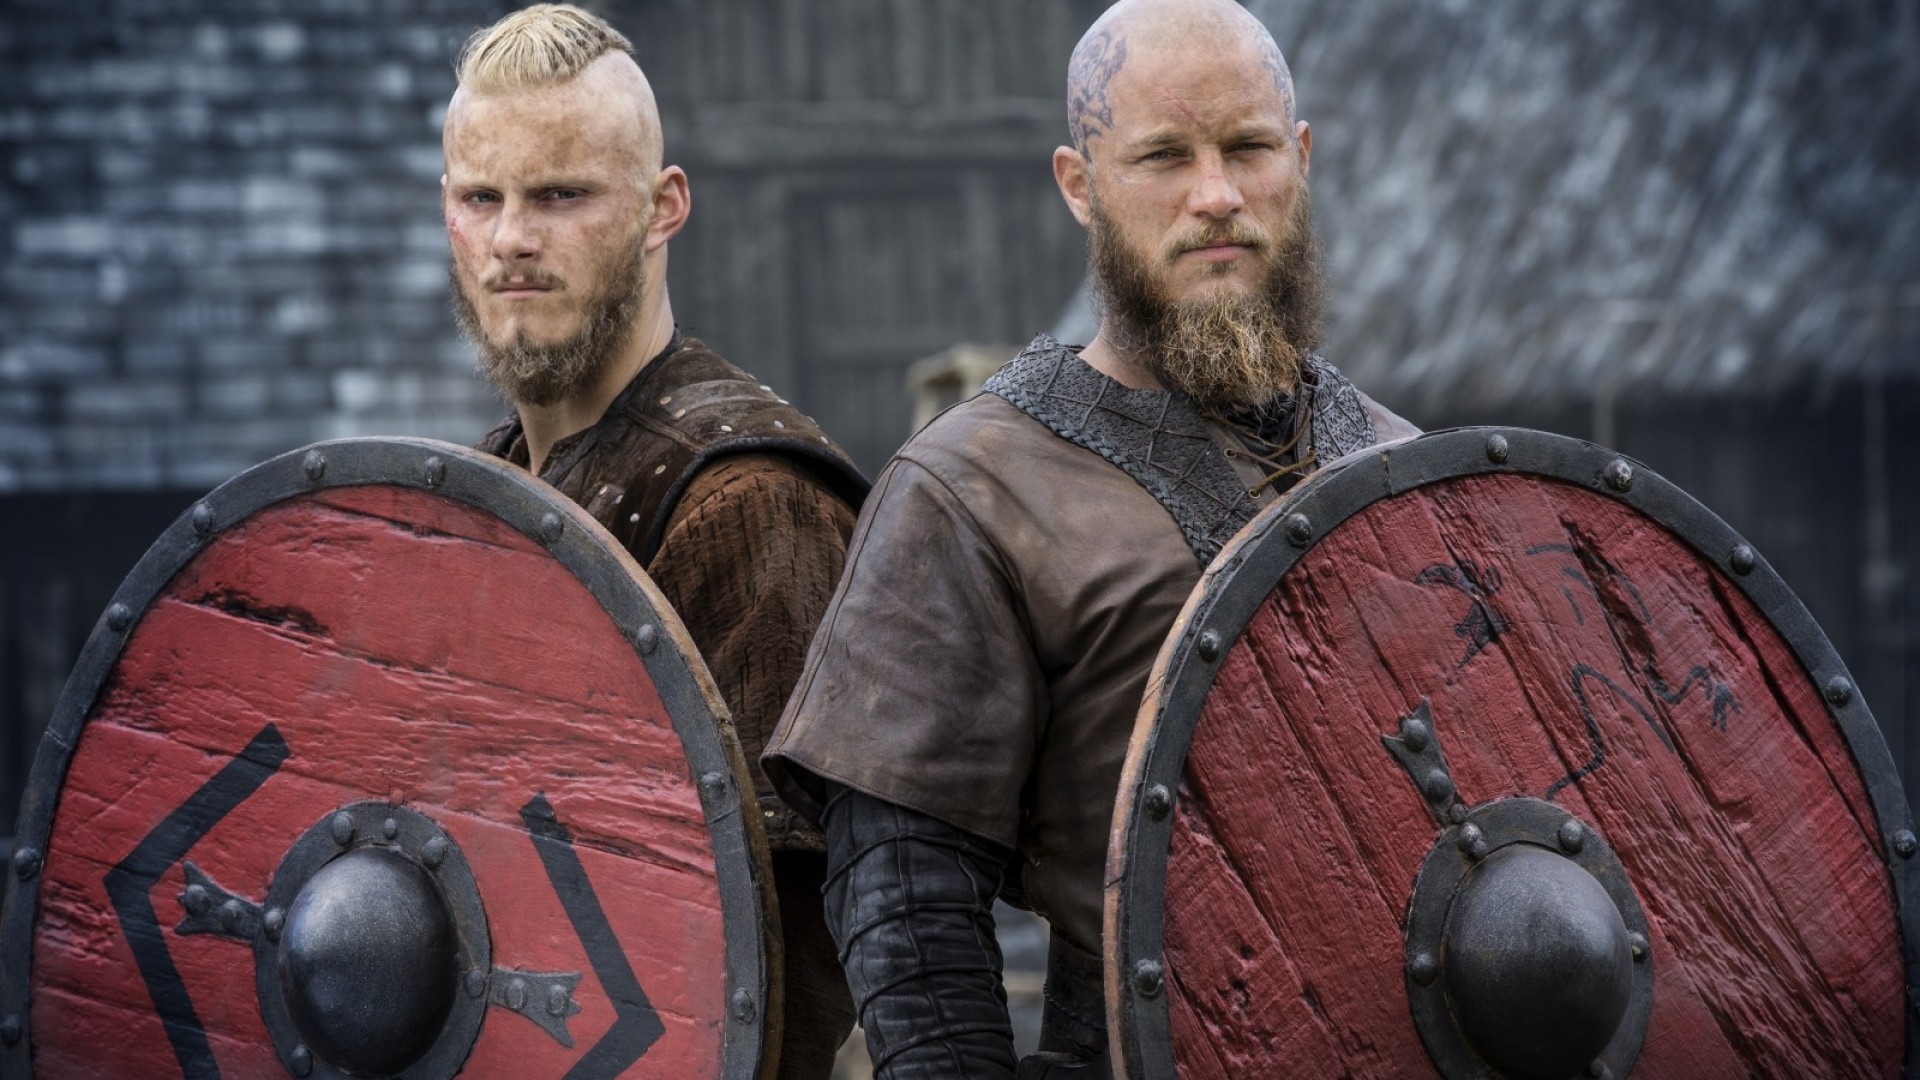 سریال Vikings